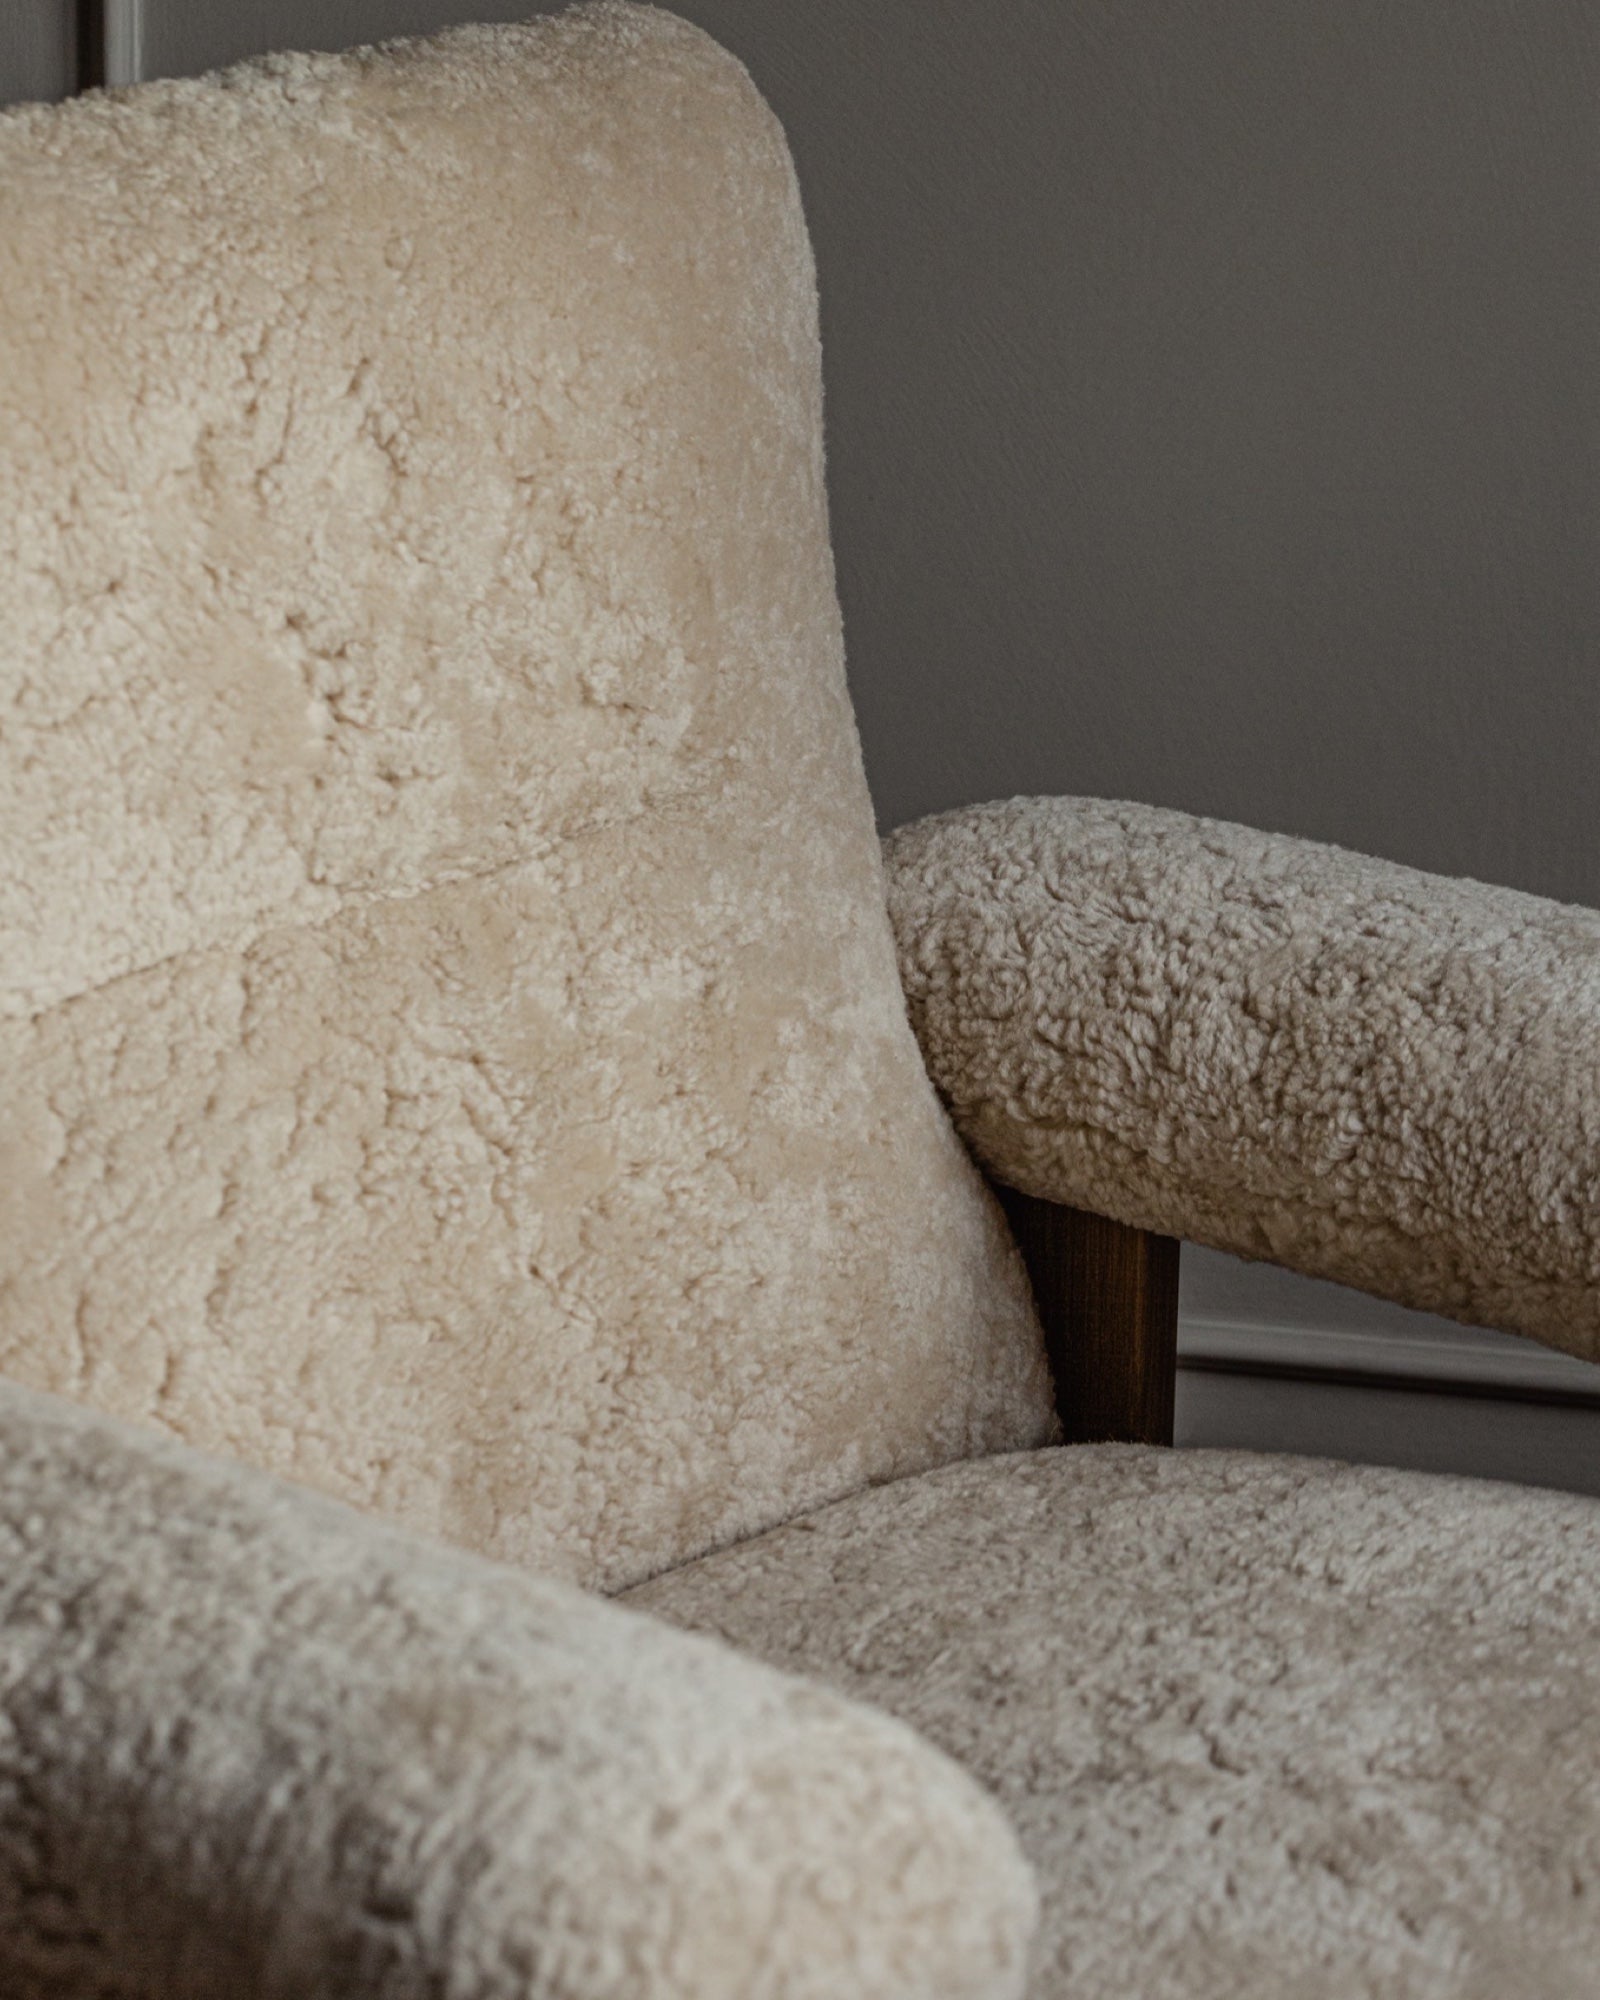 Audo Copenhagen Brasilia Lounge Chair - Sheepskin